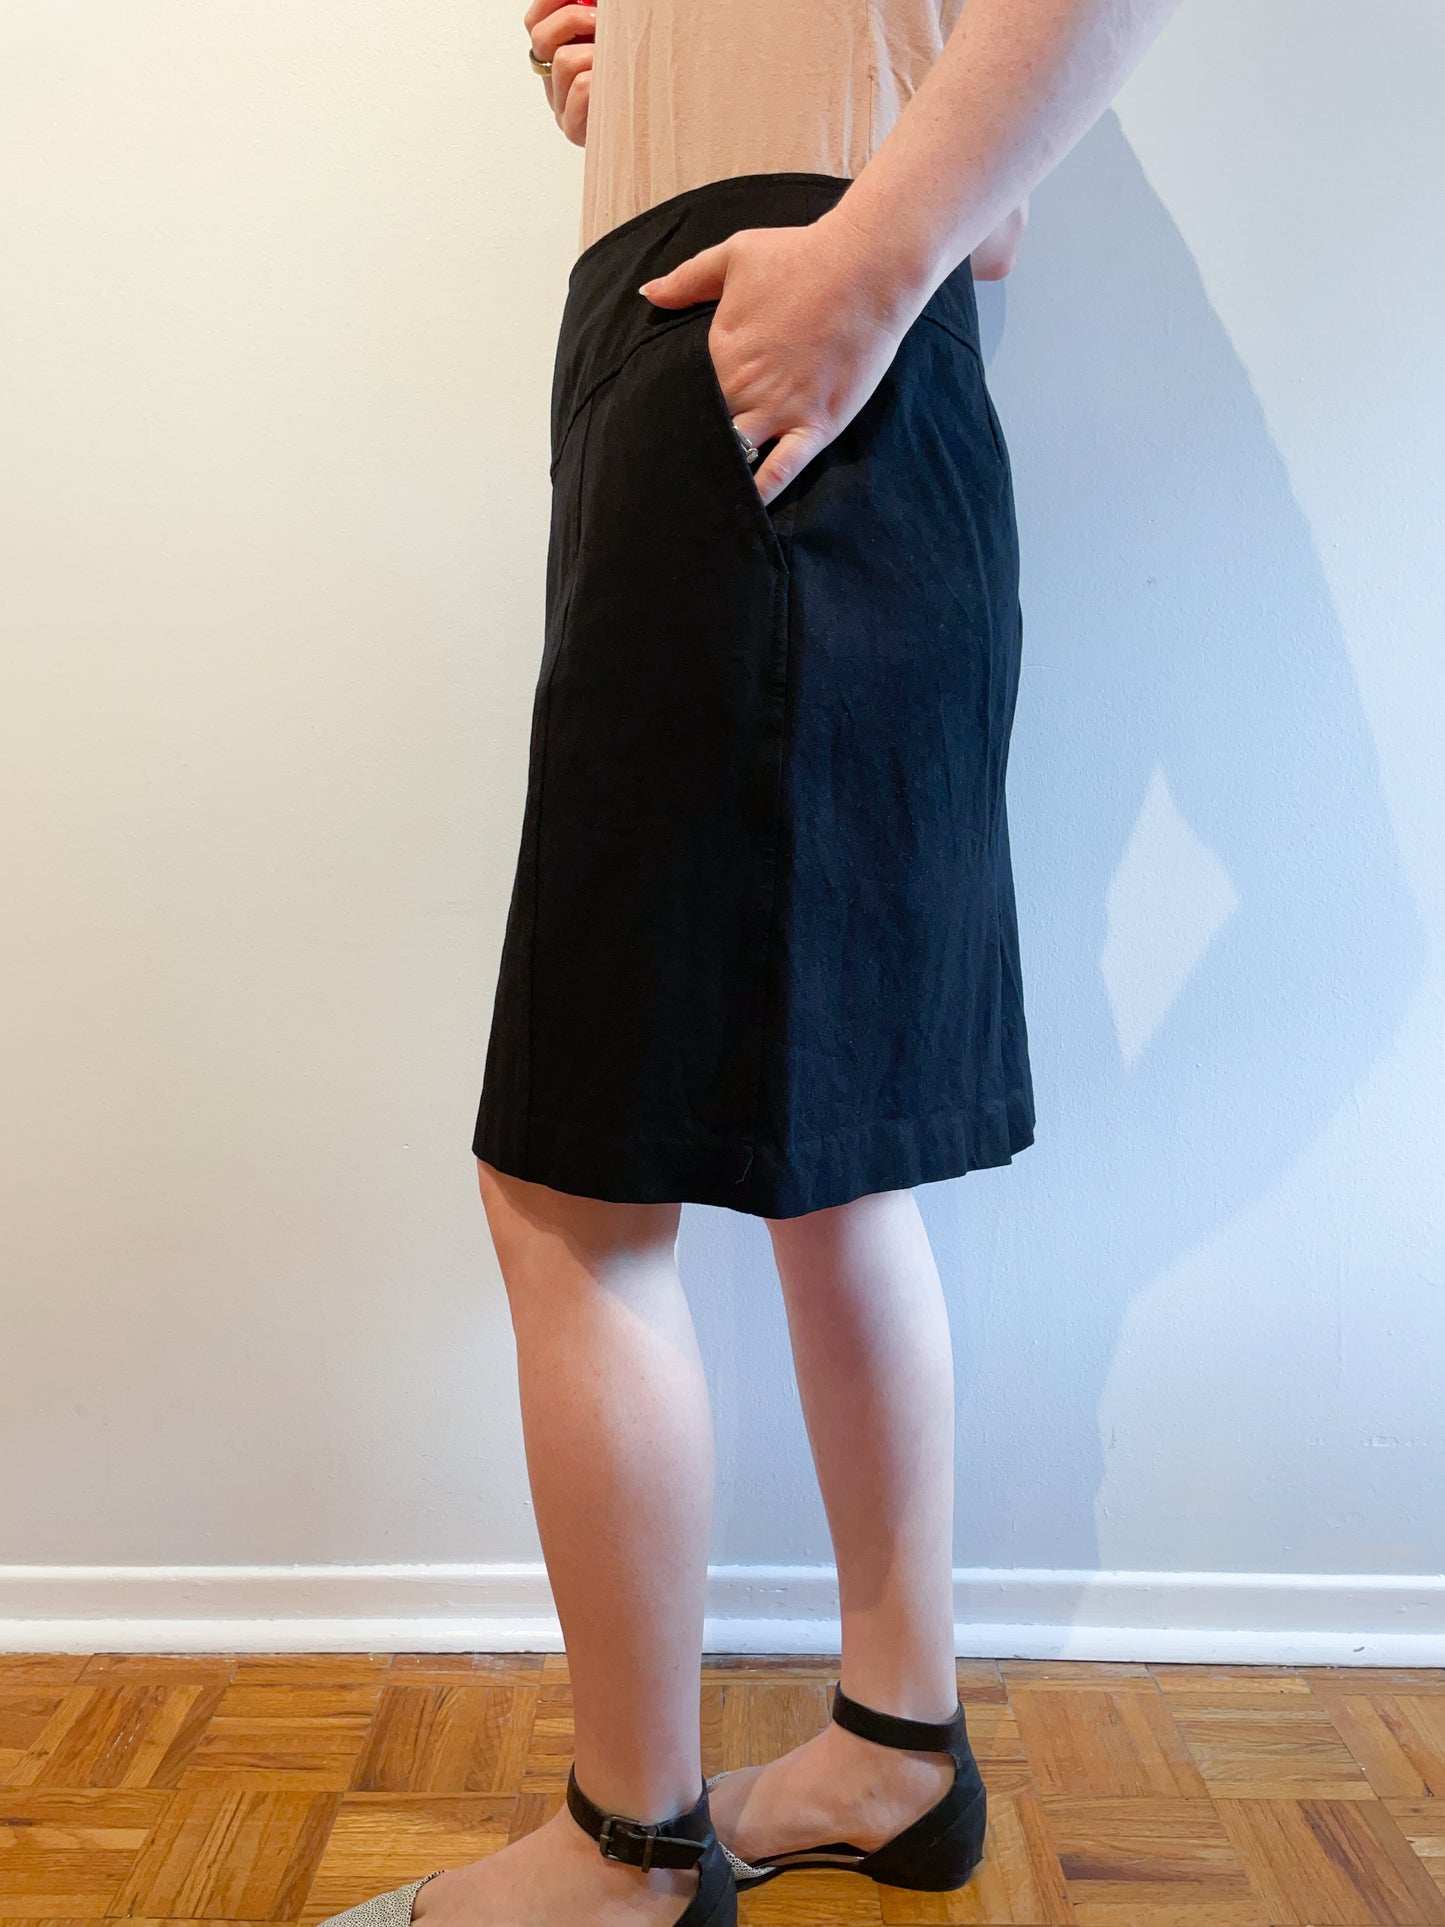 Banana Republic Black Stretch Skirt with Pockets - Size 10